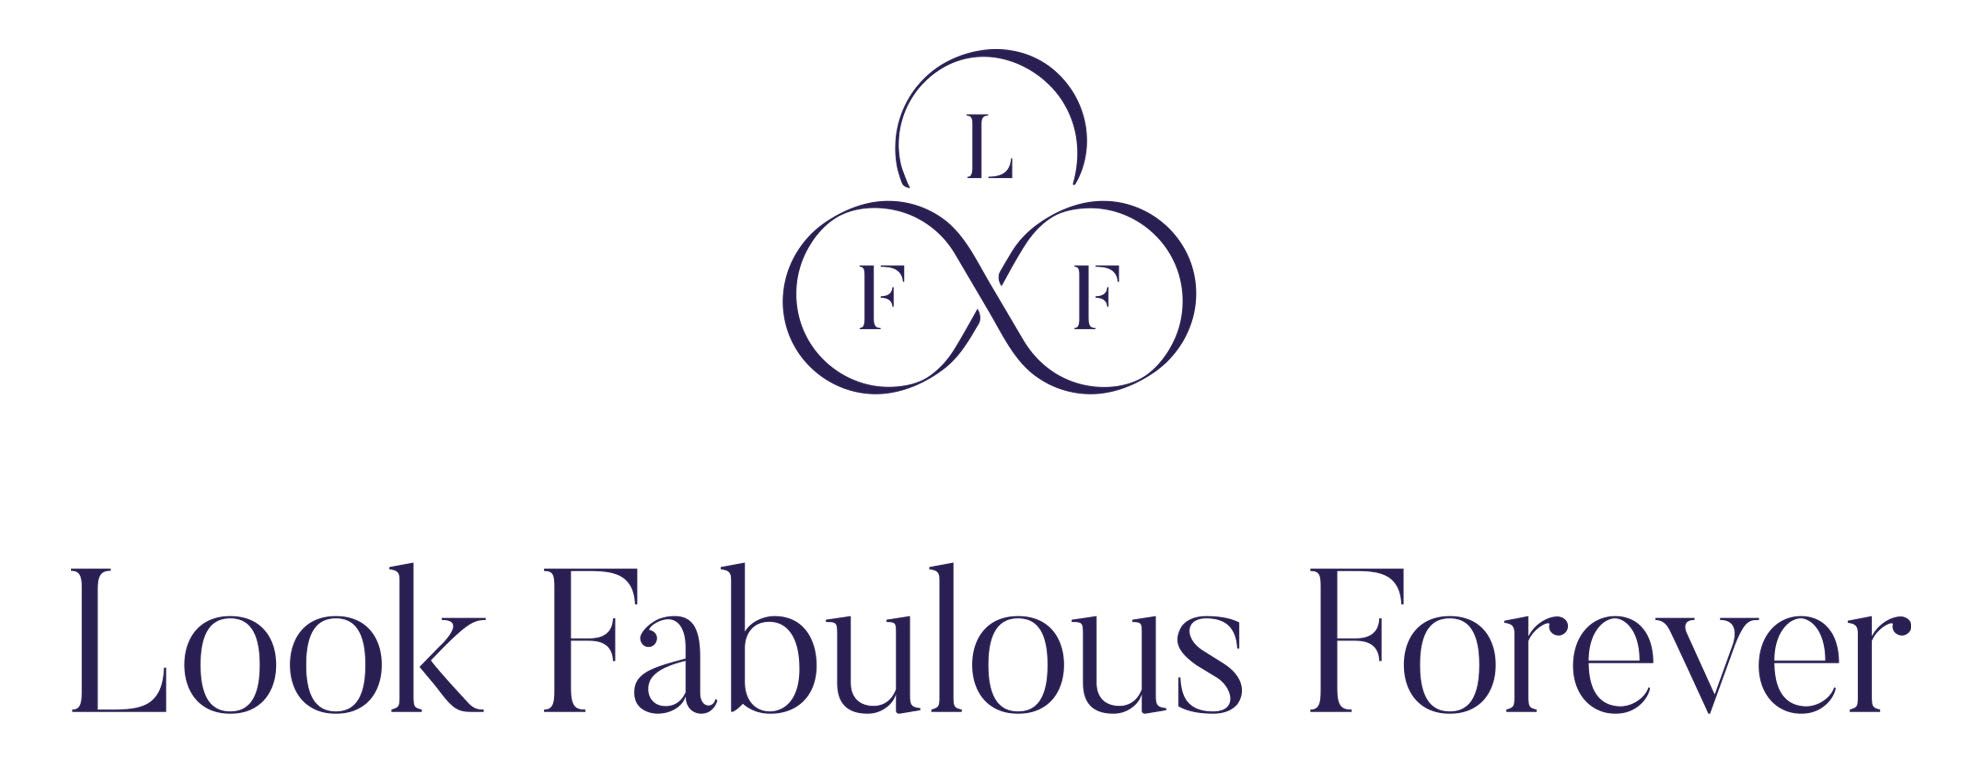 Look-Fabulous-Forever-logo-purple.jpg